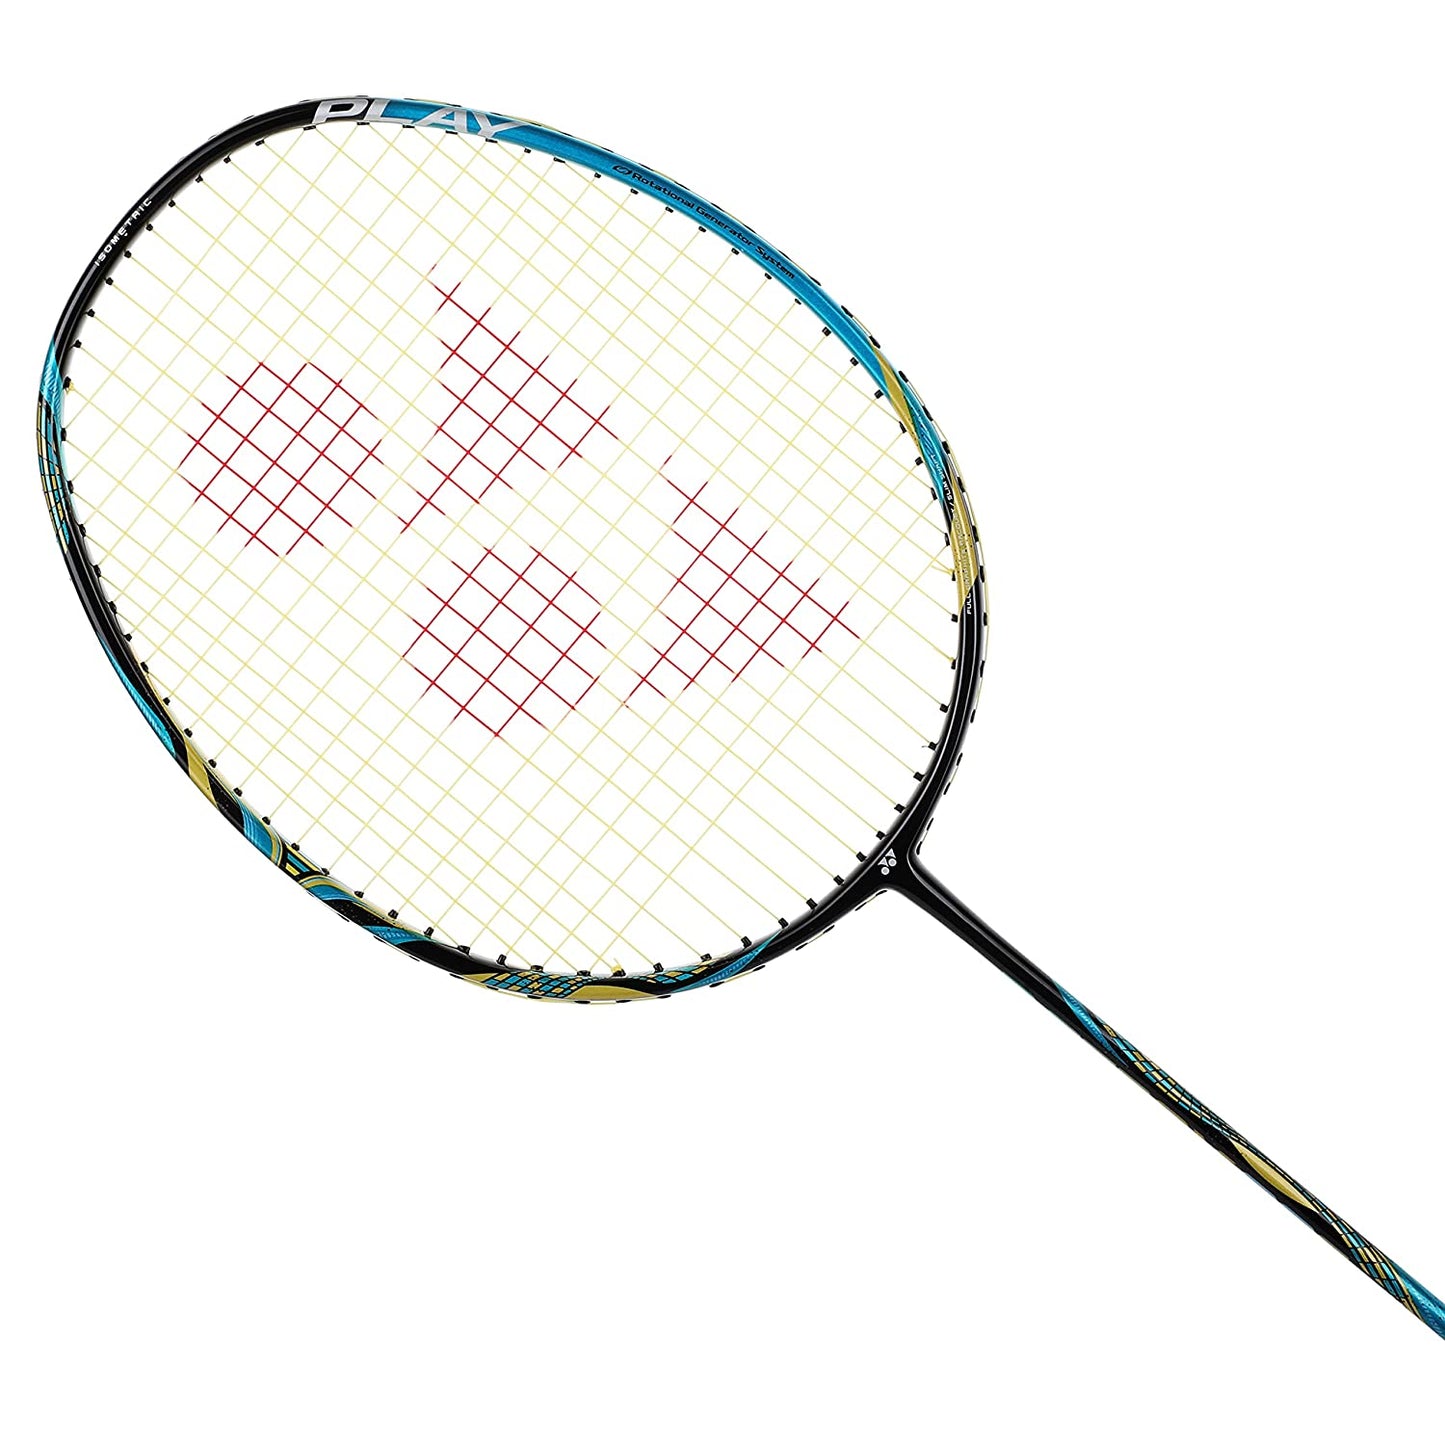 Yonex Astrox 88S PLAY Badminton Racquet - Emerald Blue - Best Price online Prokicksports.com